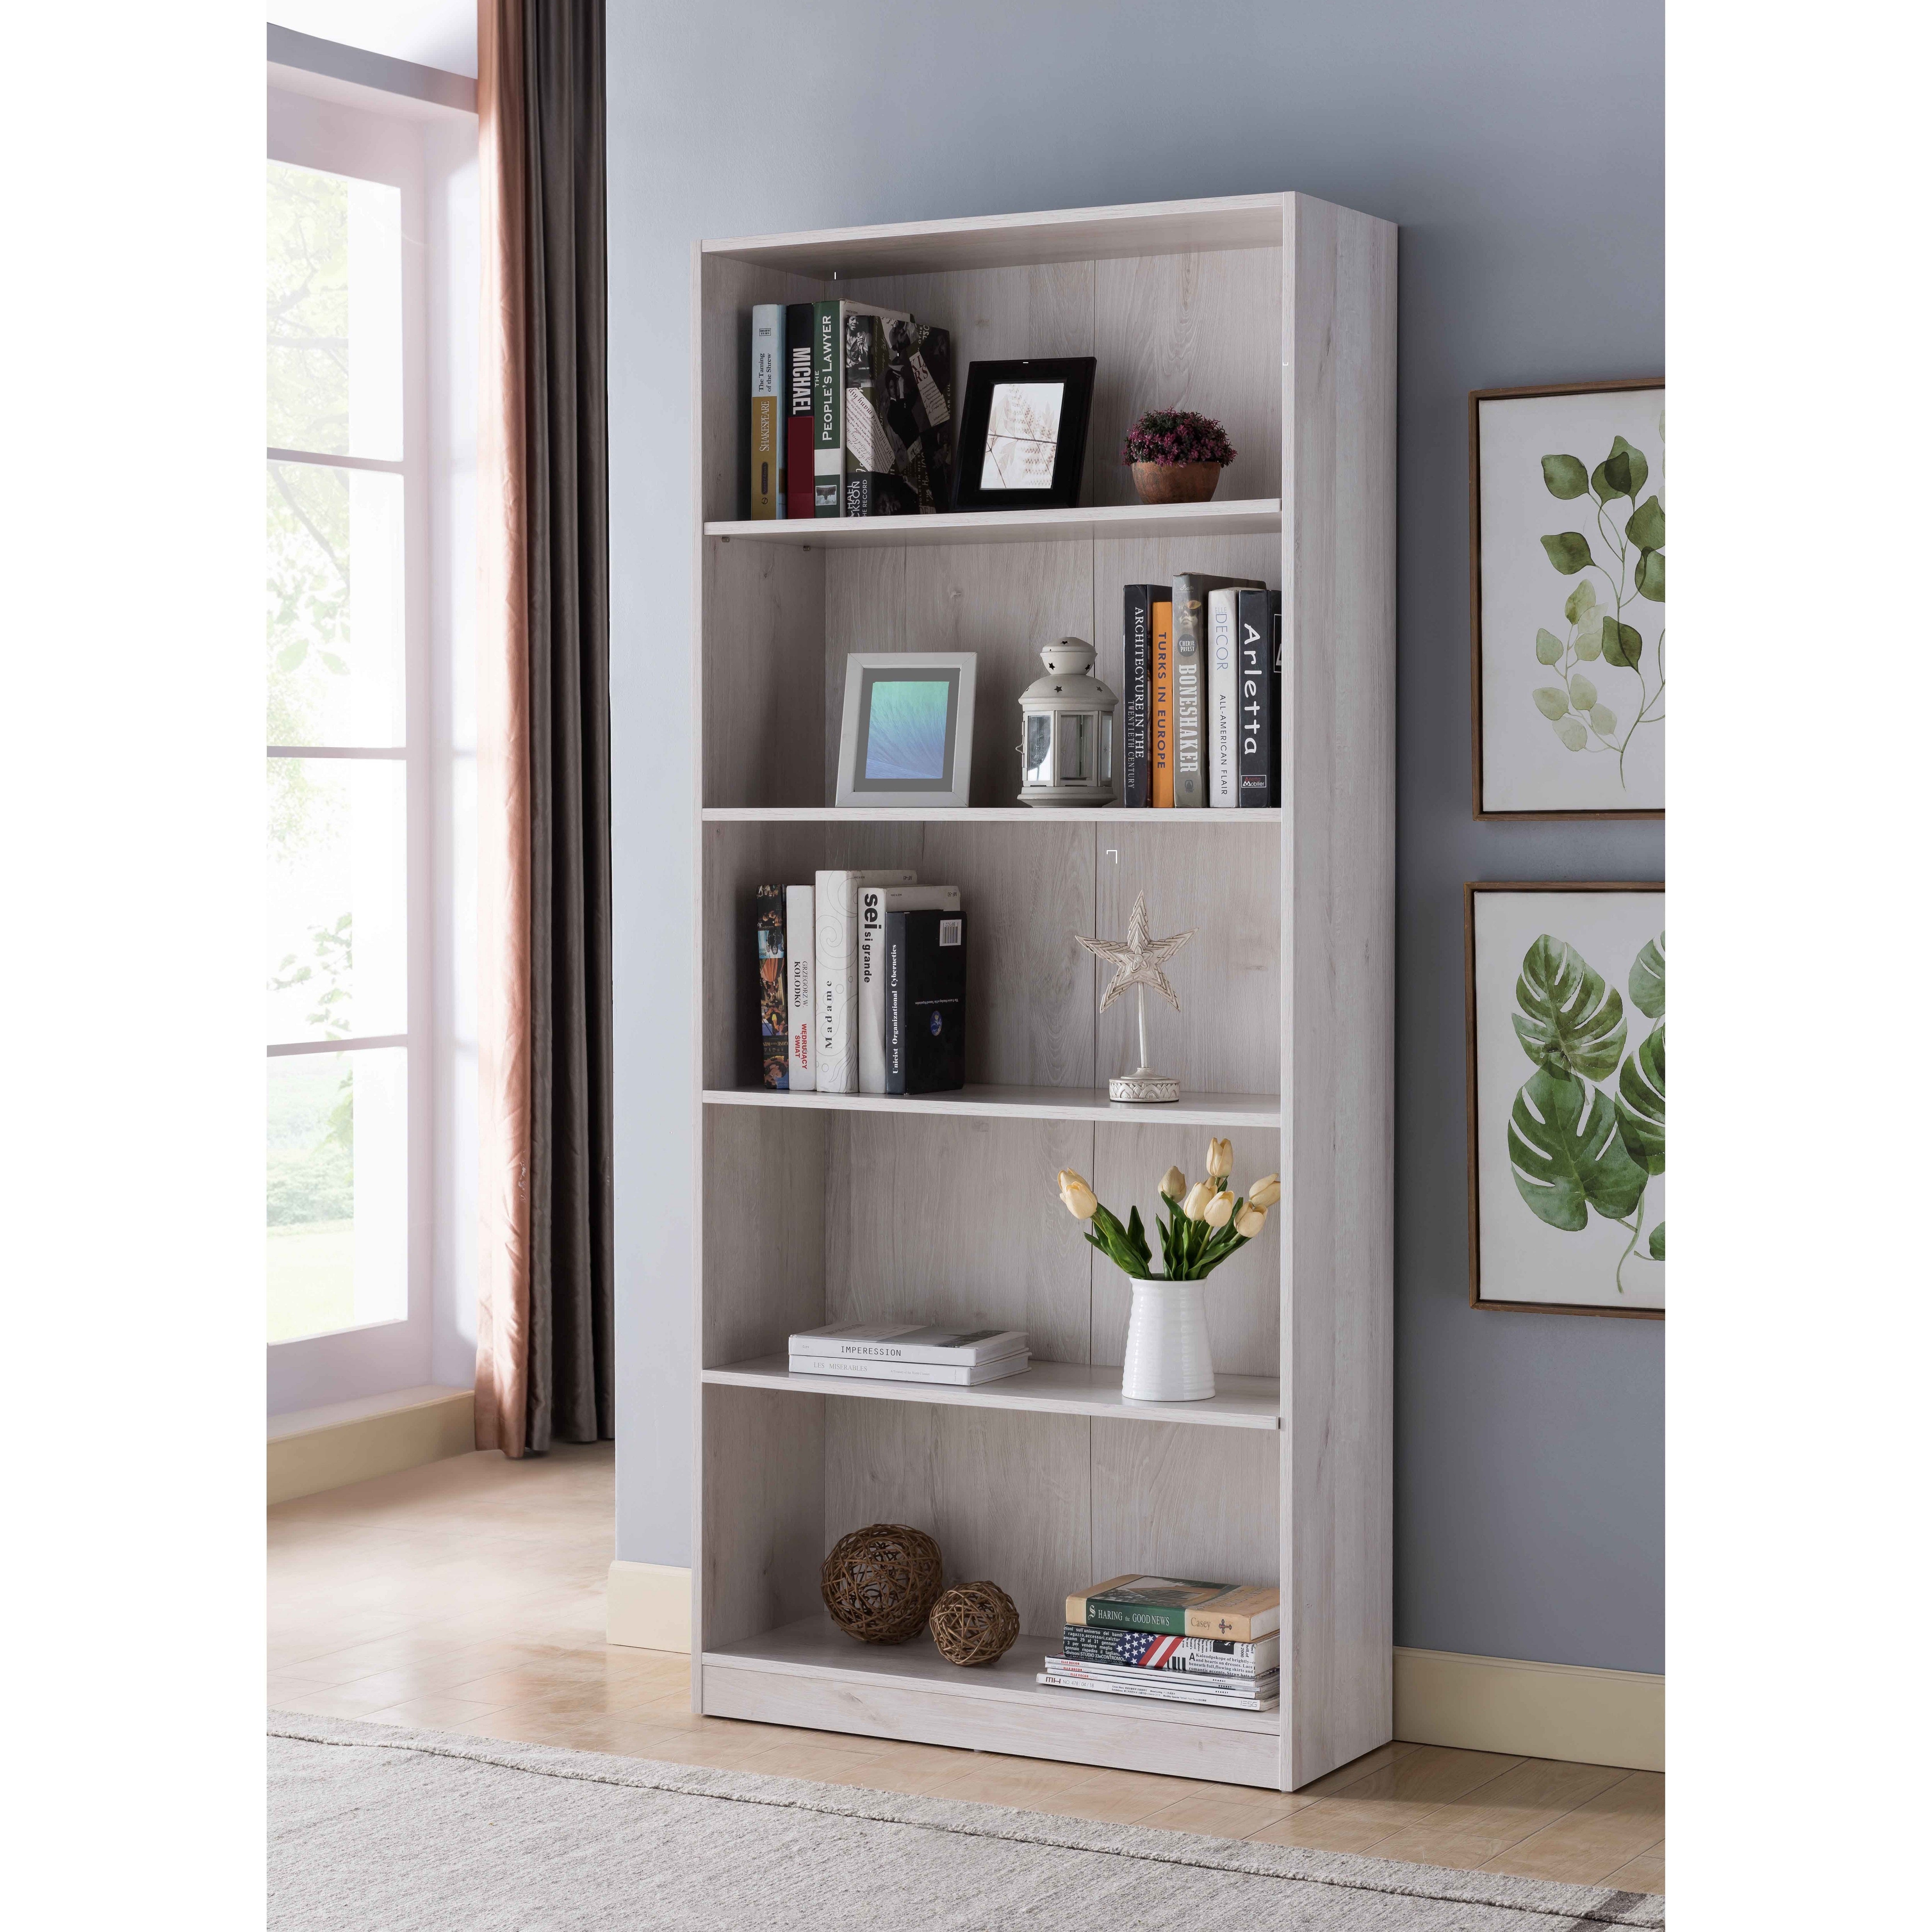 White Oak Bookcase Book Shelf with 5 Shelves